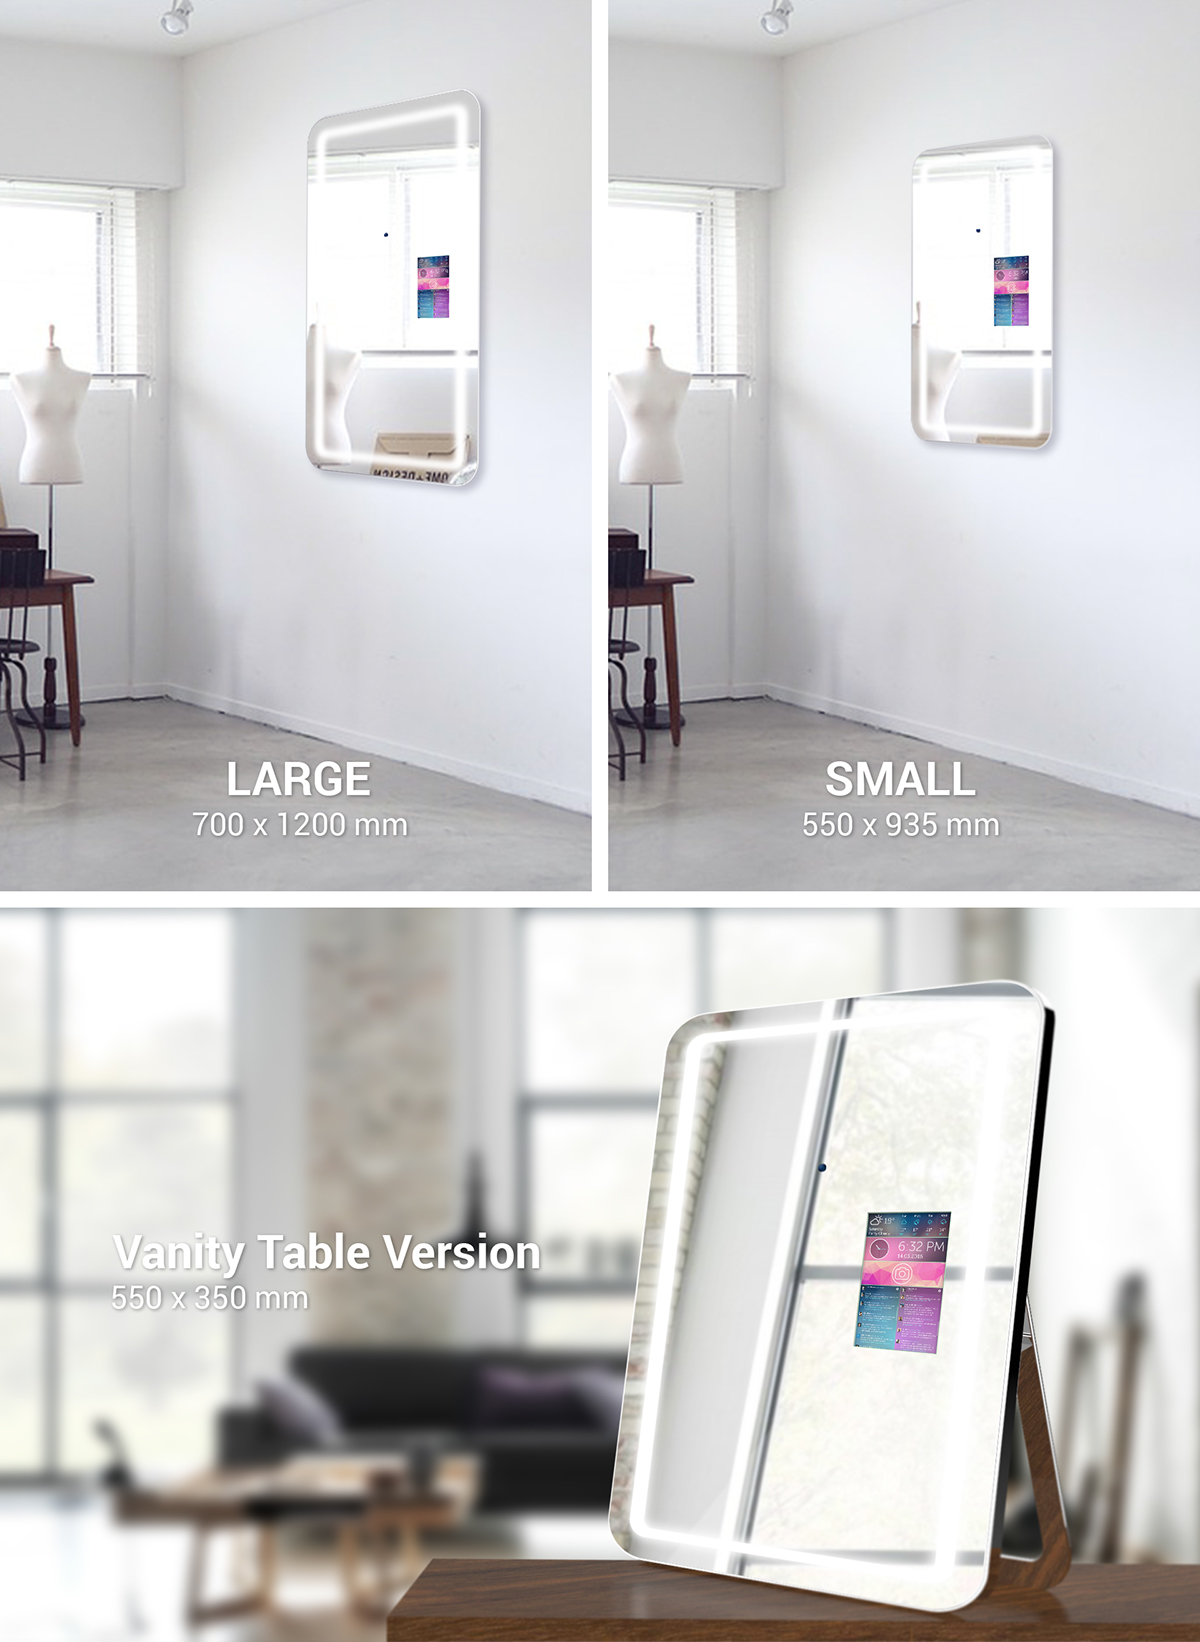 Smart mirror home Secure sound Interior electric jeabyun yeon selfie